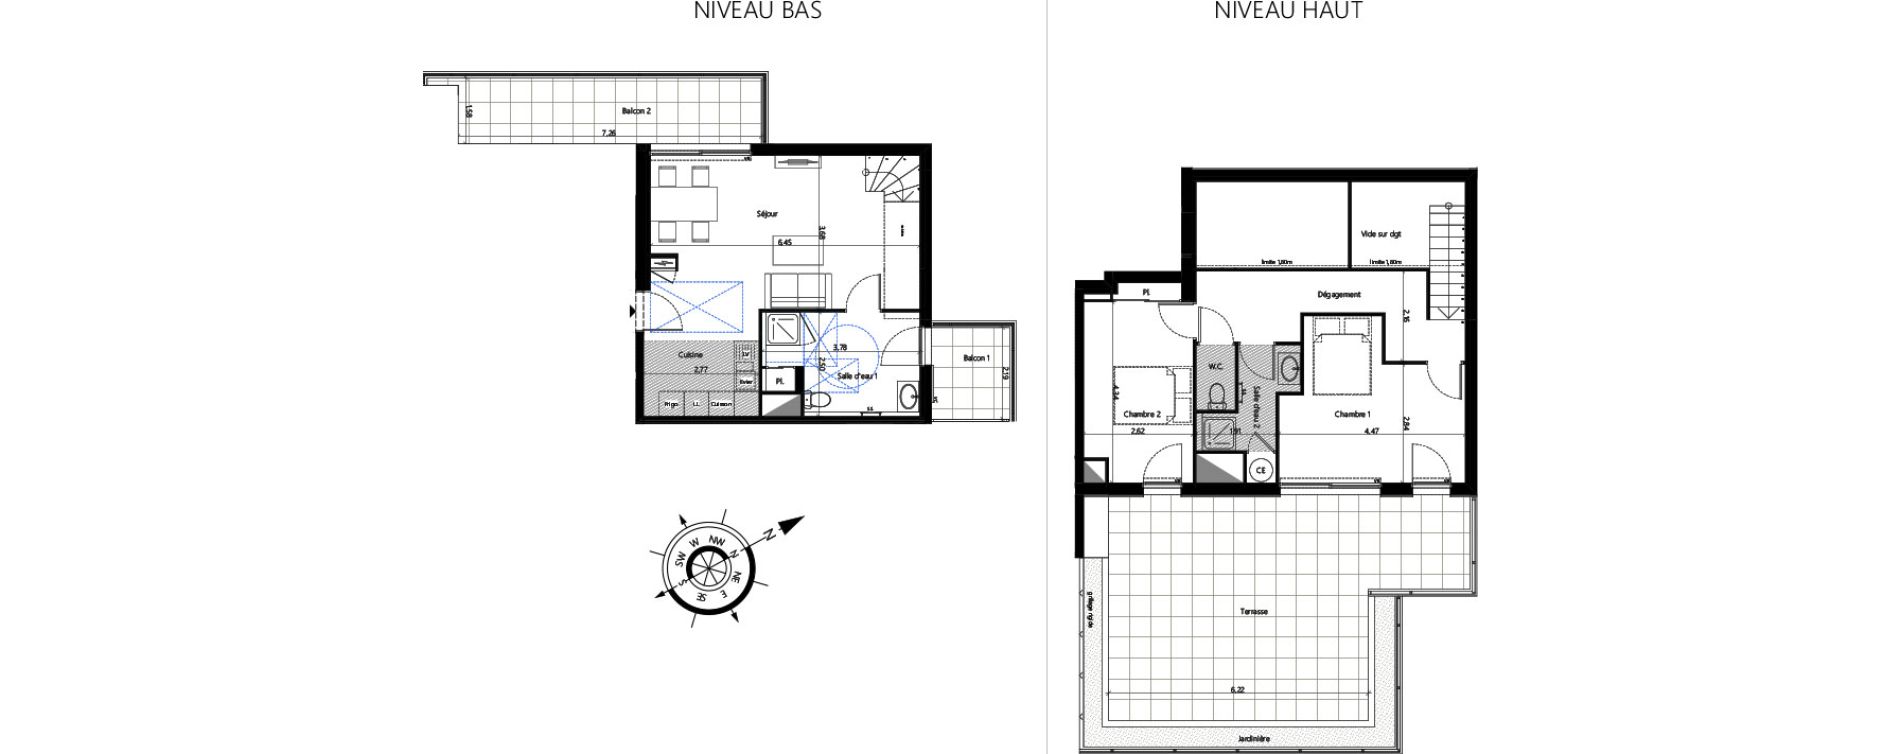 Duplex T3 de 77,40 m2 &agrave; Nice Nice st maurice